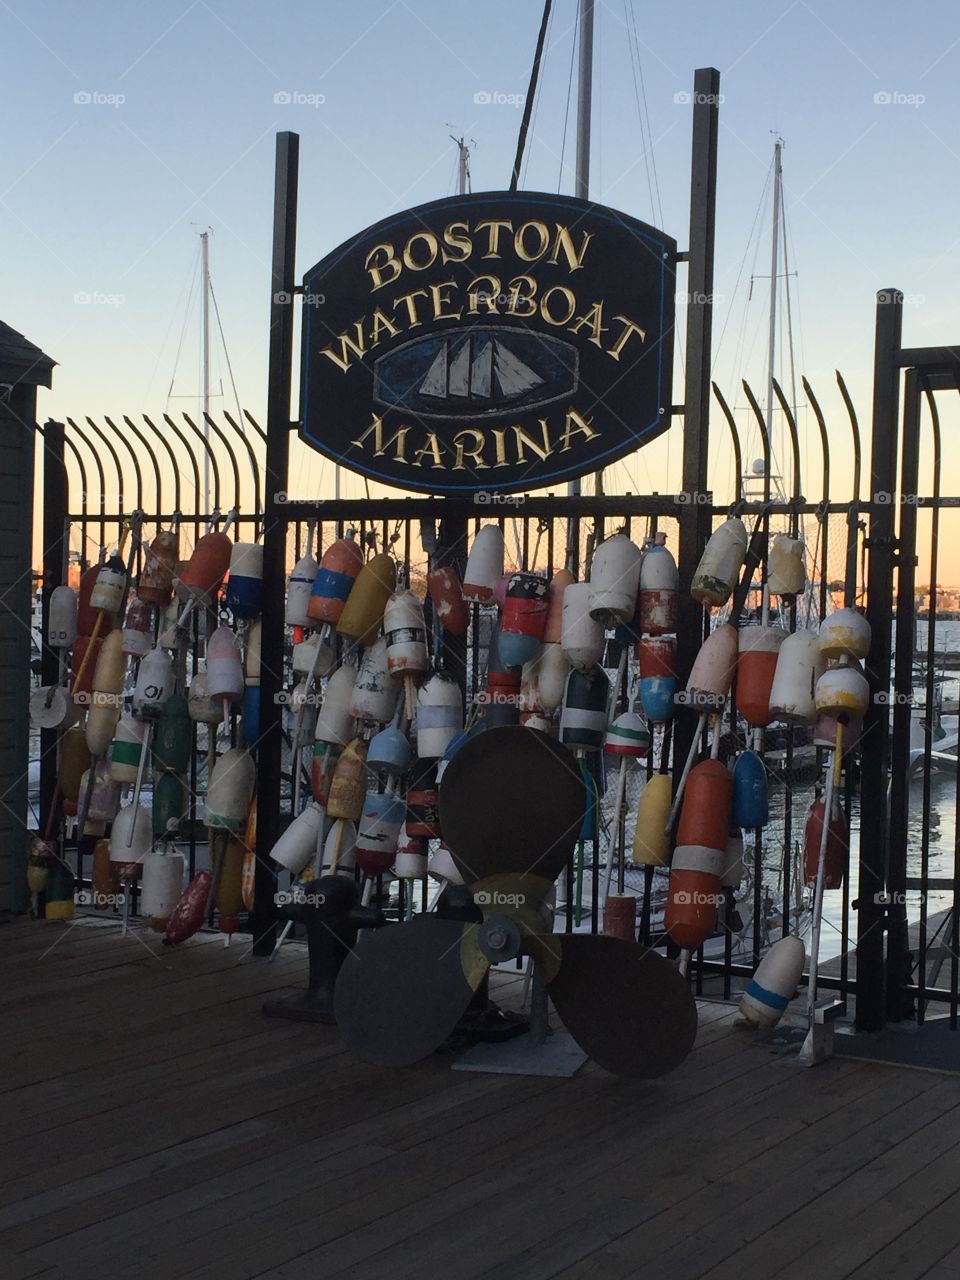 Buoys at the Boston Waterboat Marina